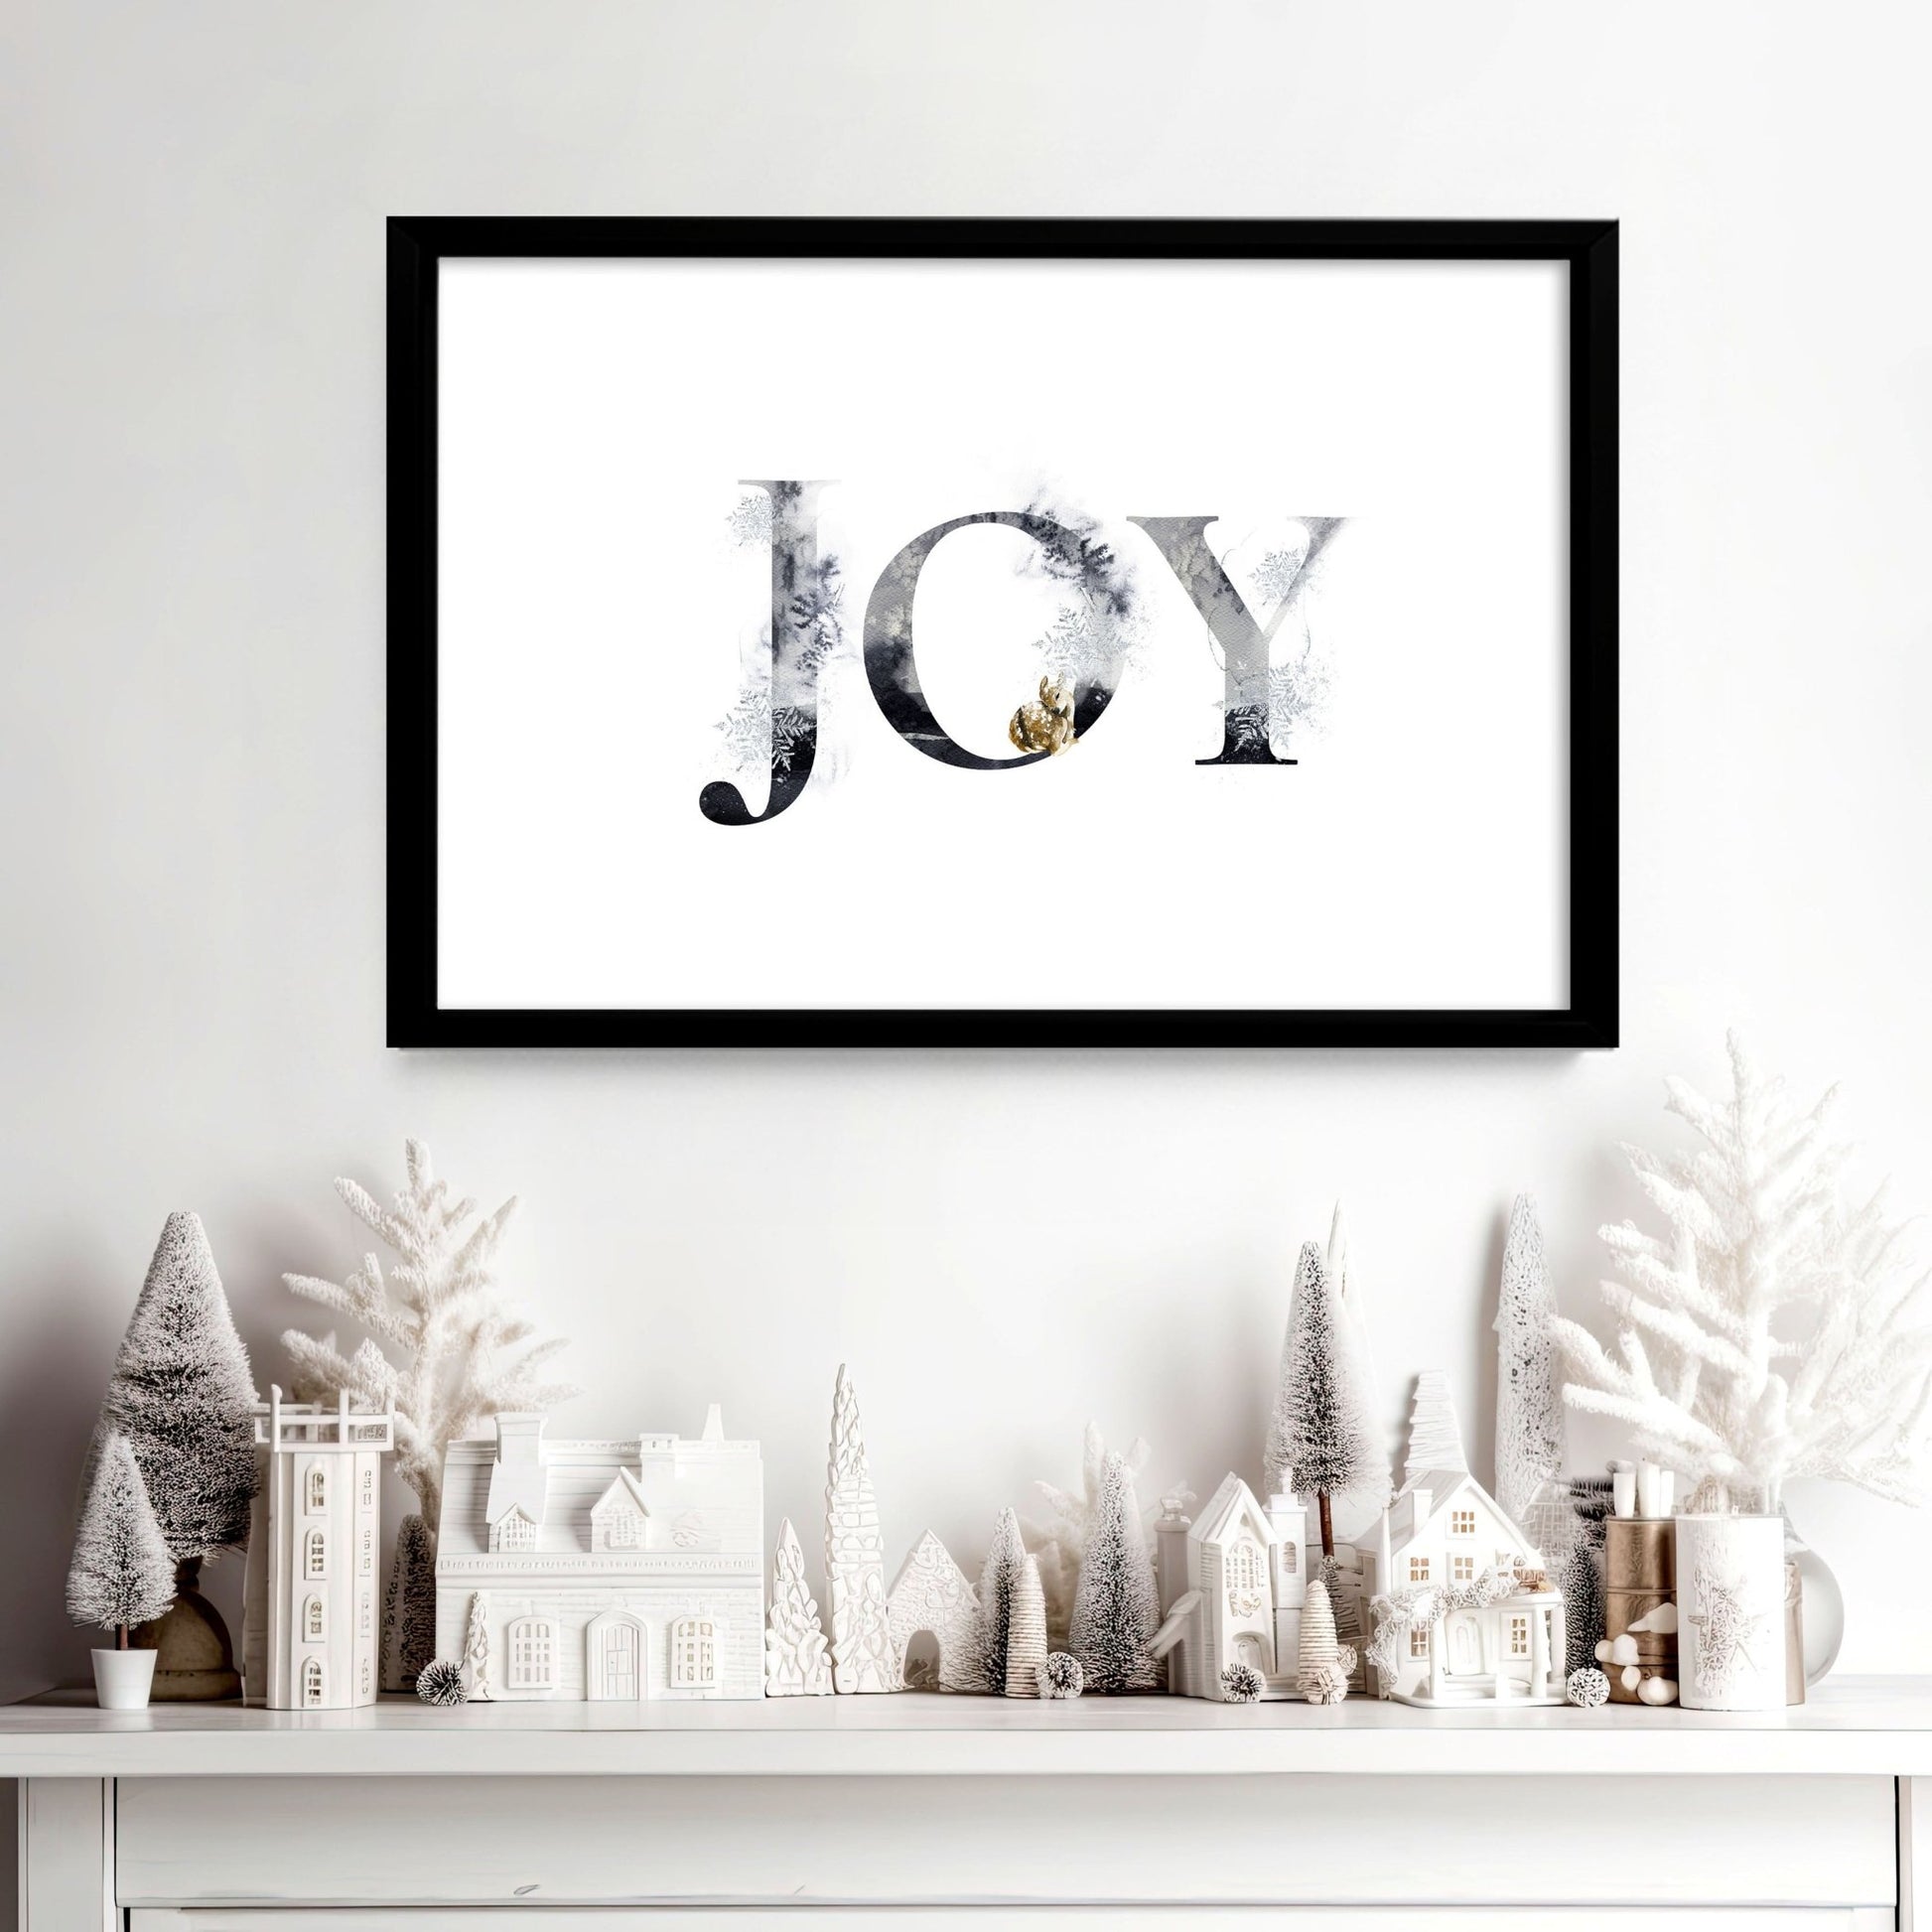 Joy wall art print for Christmas decor - About Wall Art